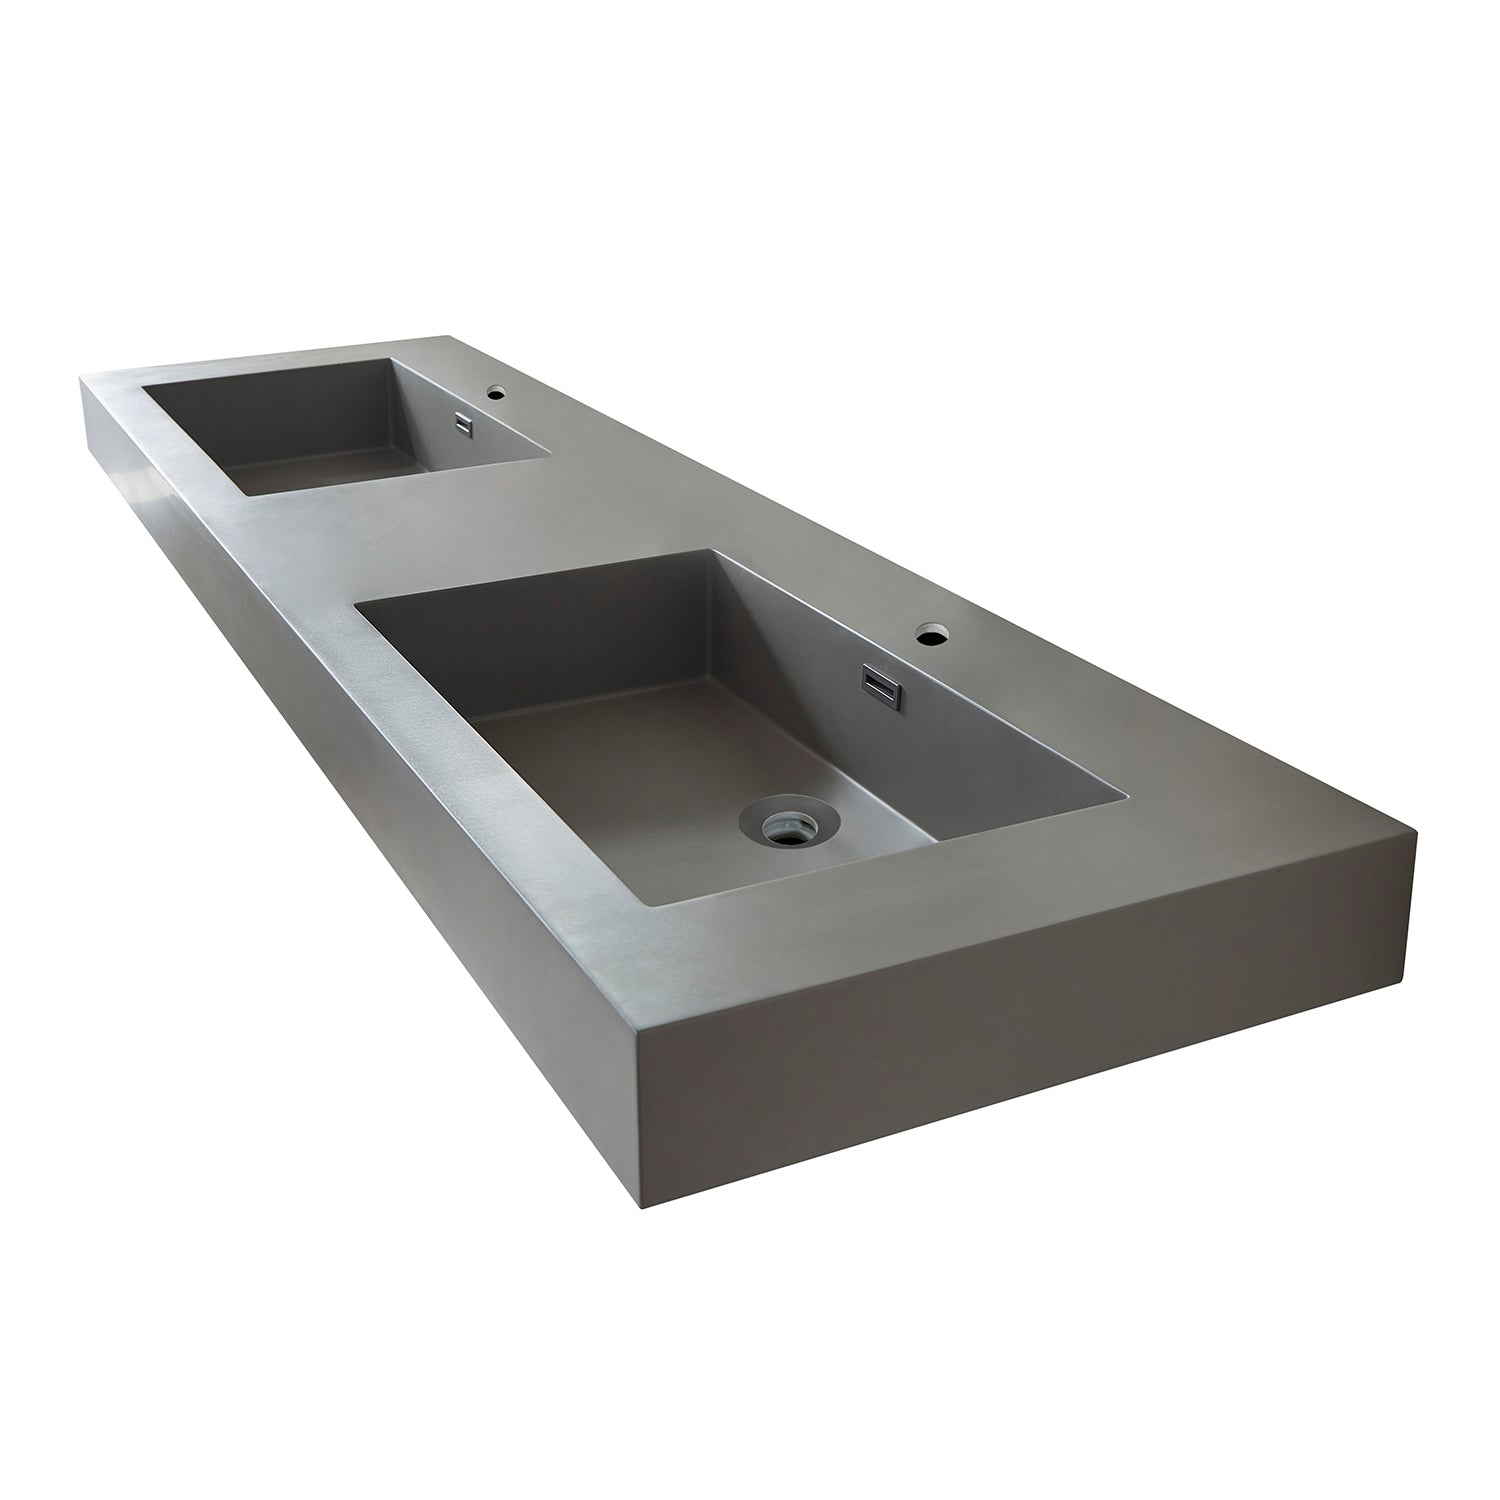 Ablitas Square Grey Finish Composite Granite Stone Vessel Bathroom Vanity Sink